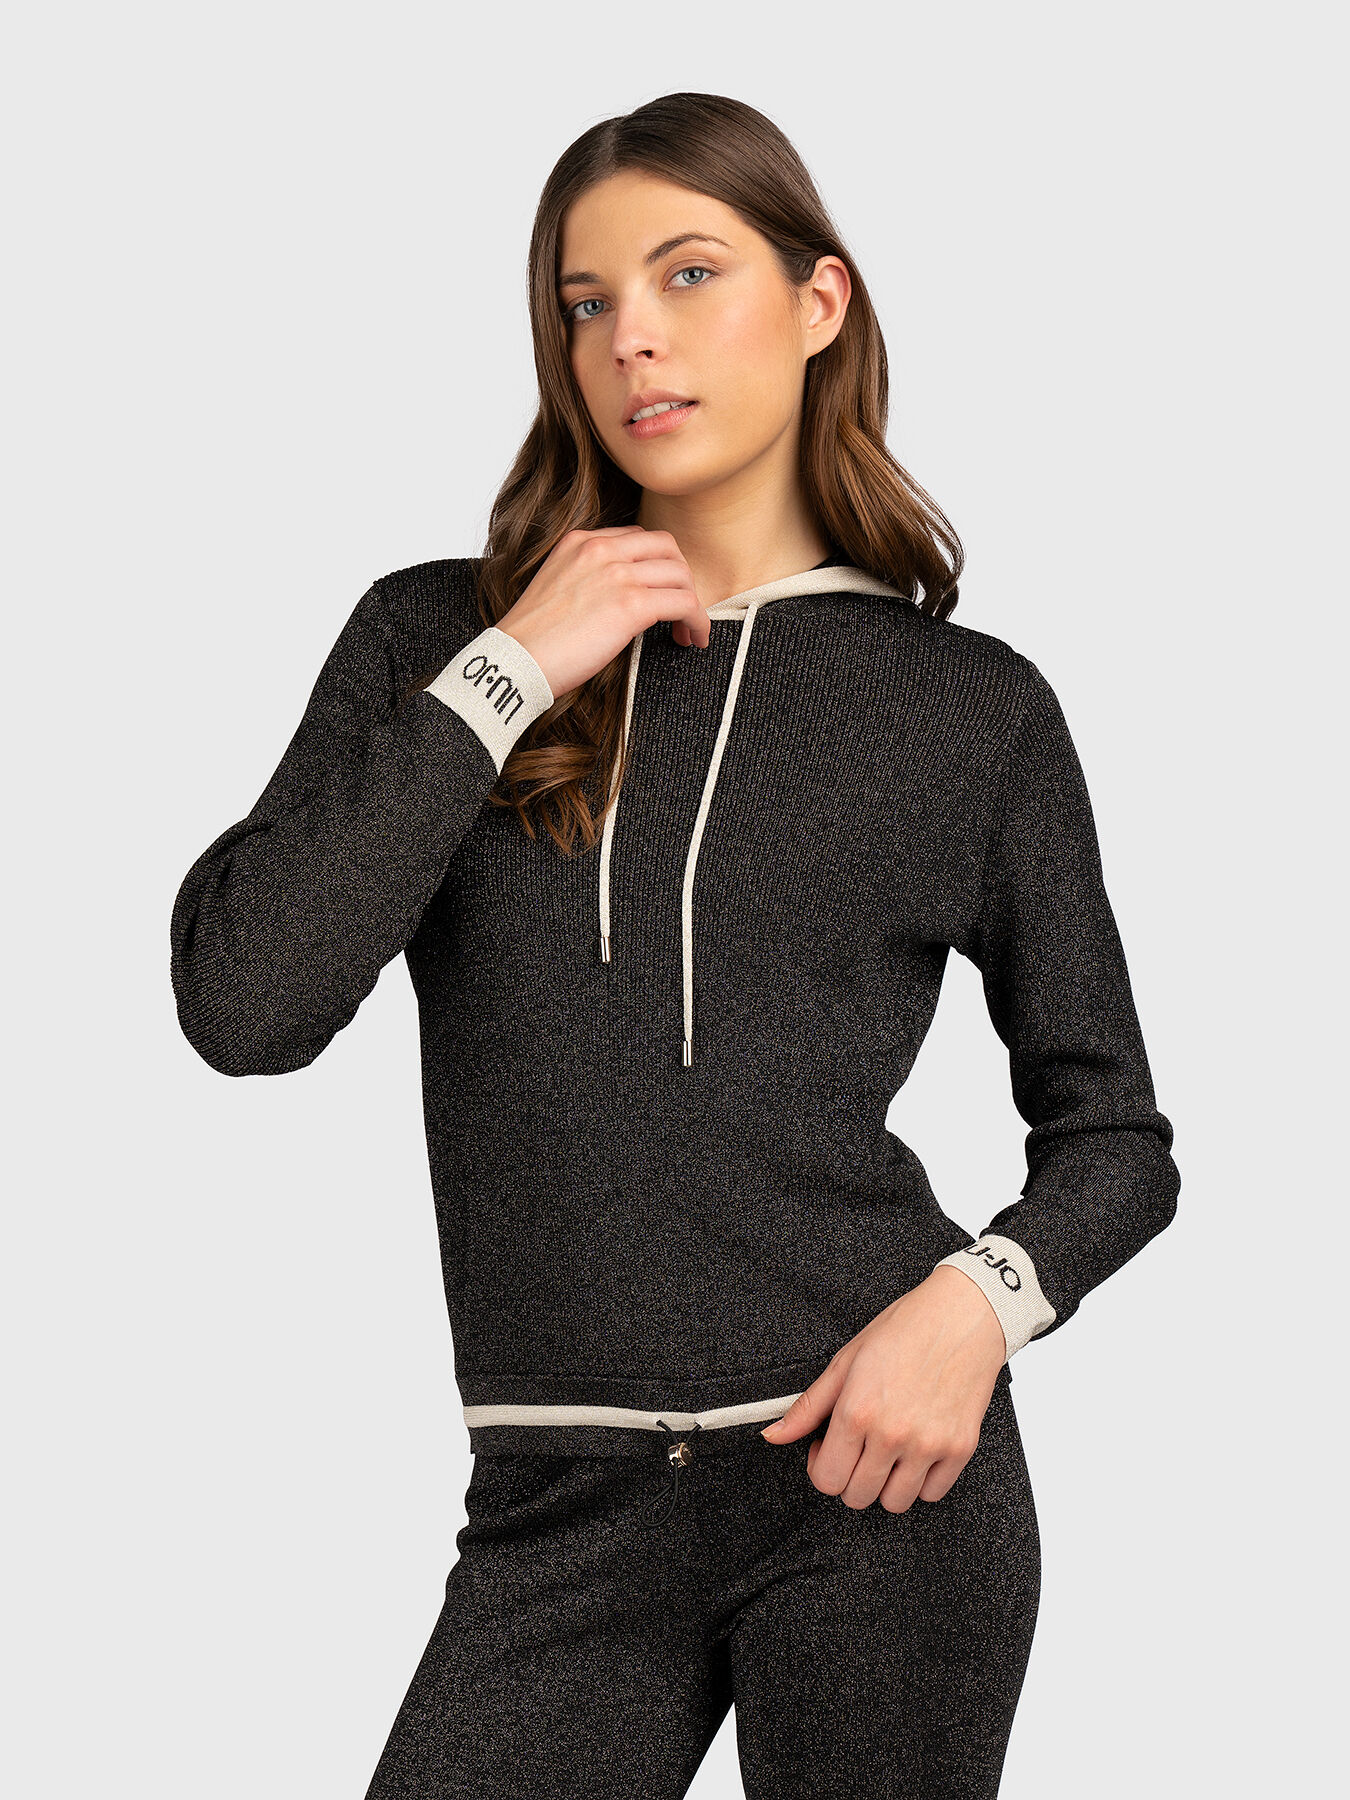 Women's sports sweatshirts • Online • prices - Global Brands Store